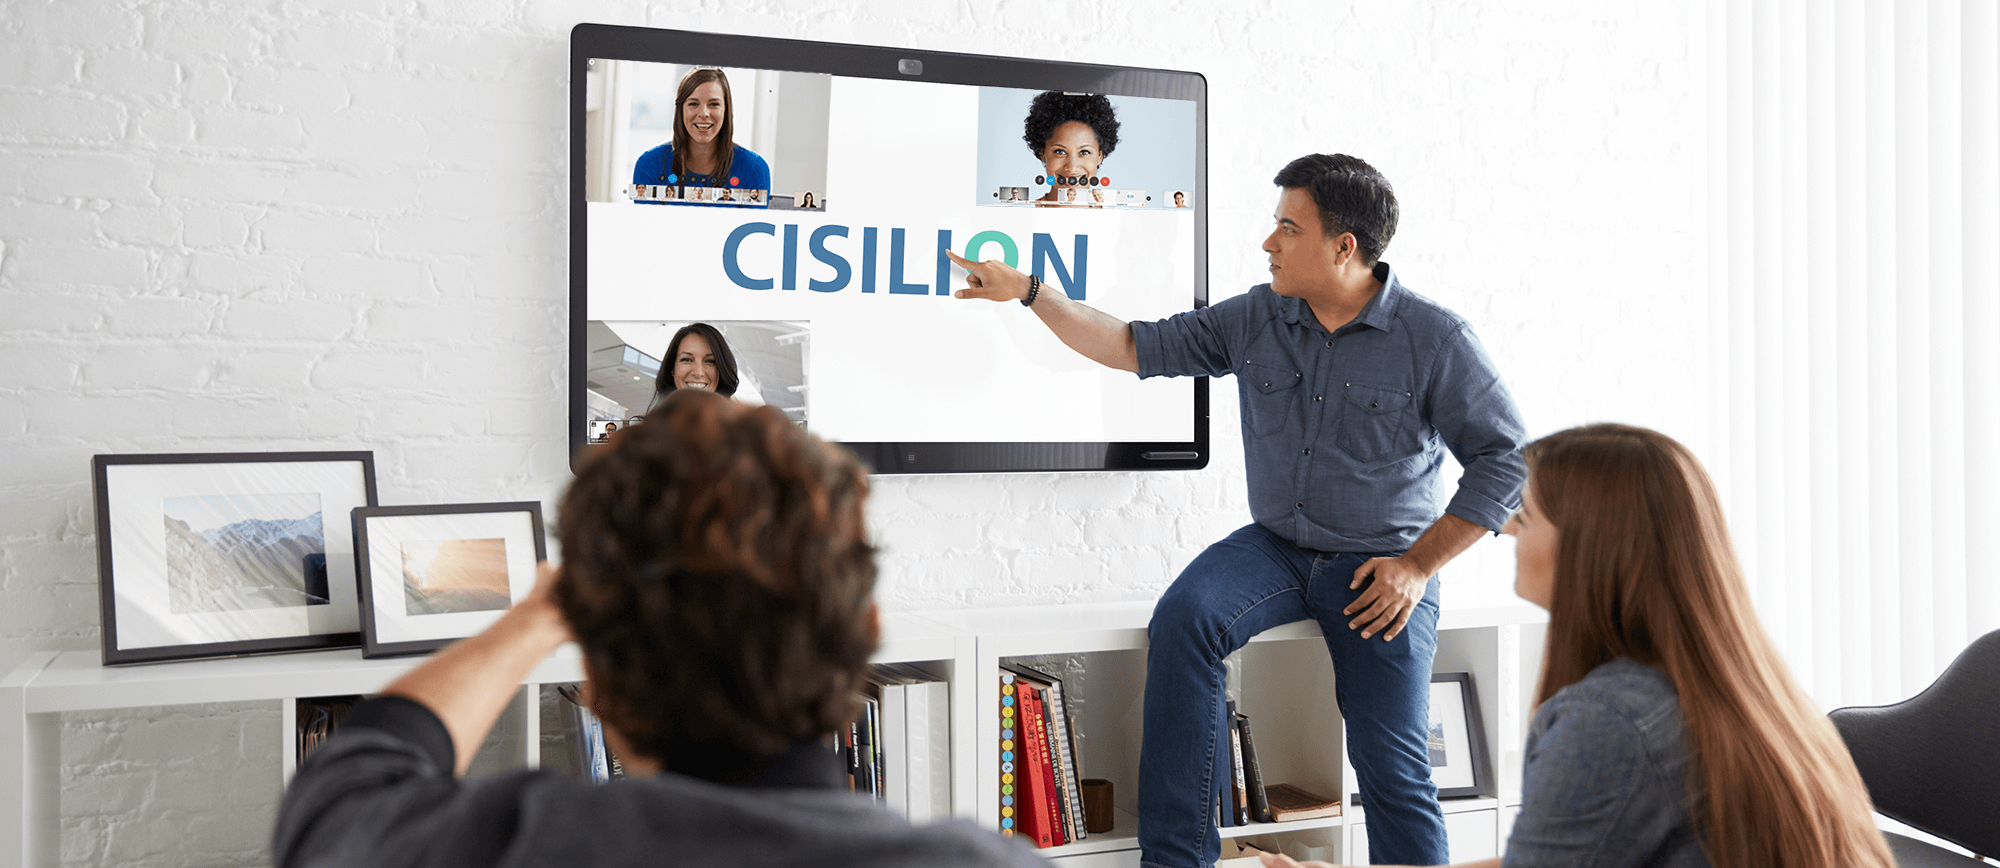 Cisilion re-certified as Cisco Gold Partner